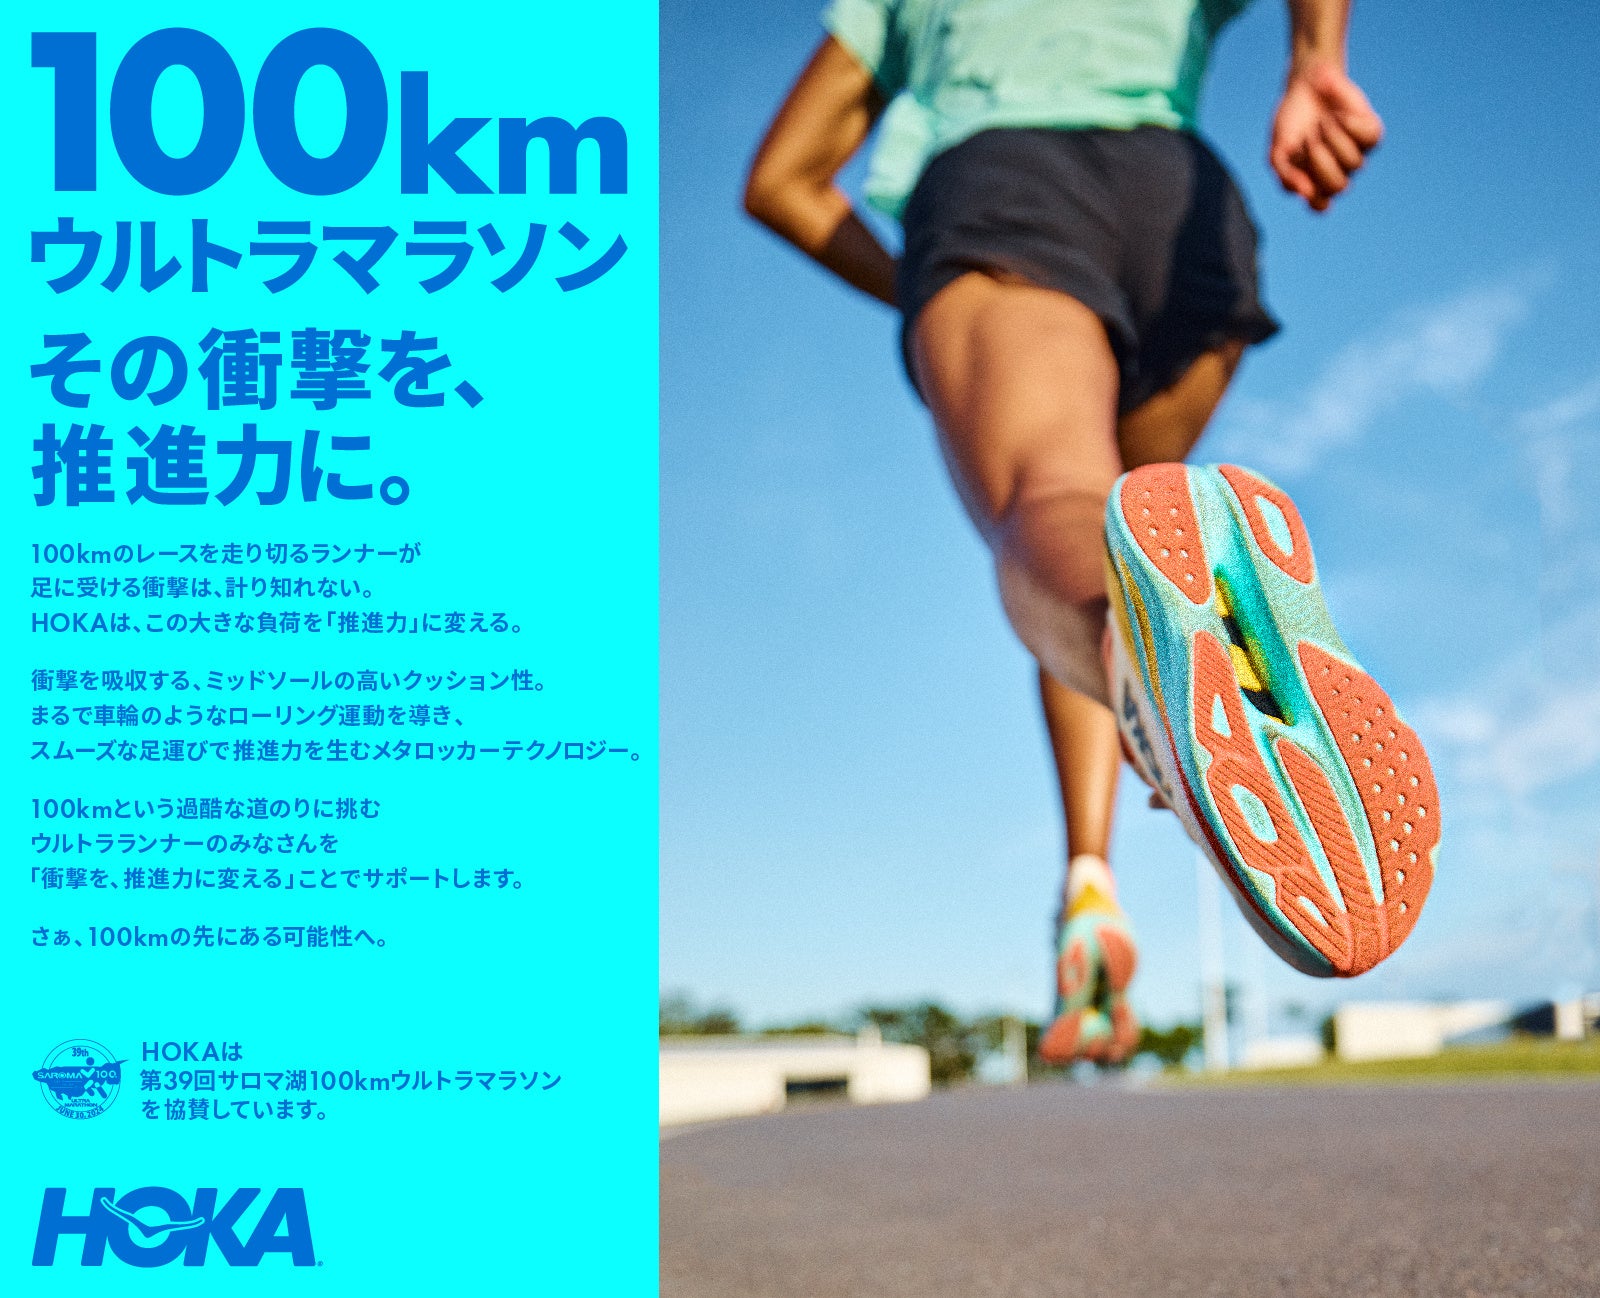 HOKAが100kmの世界記録に挑戦するウルトラランナーを応援！『HOKA 100km ワールドチャンピオンシップチャレンジ』第2弾を実施6月30日開催